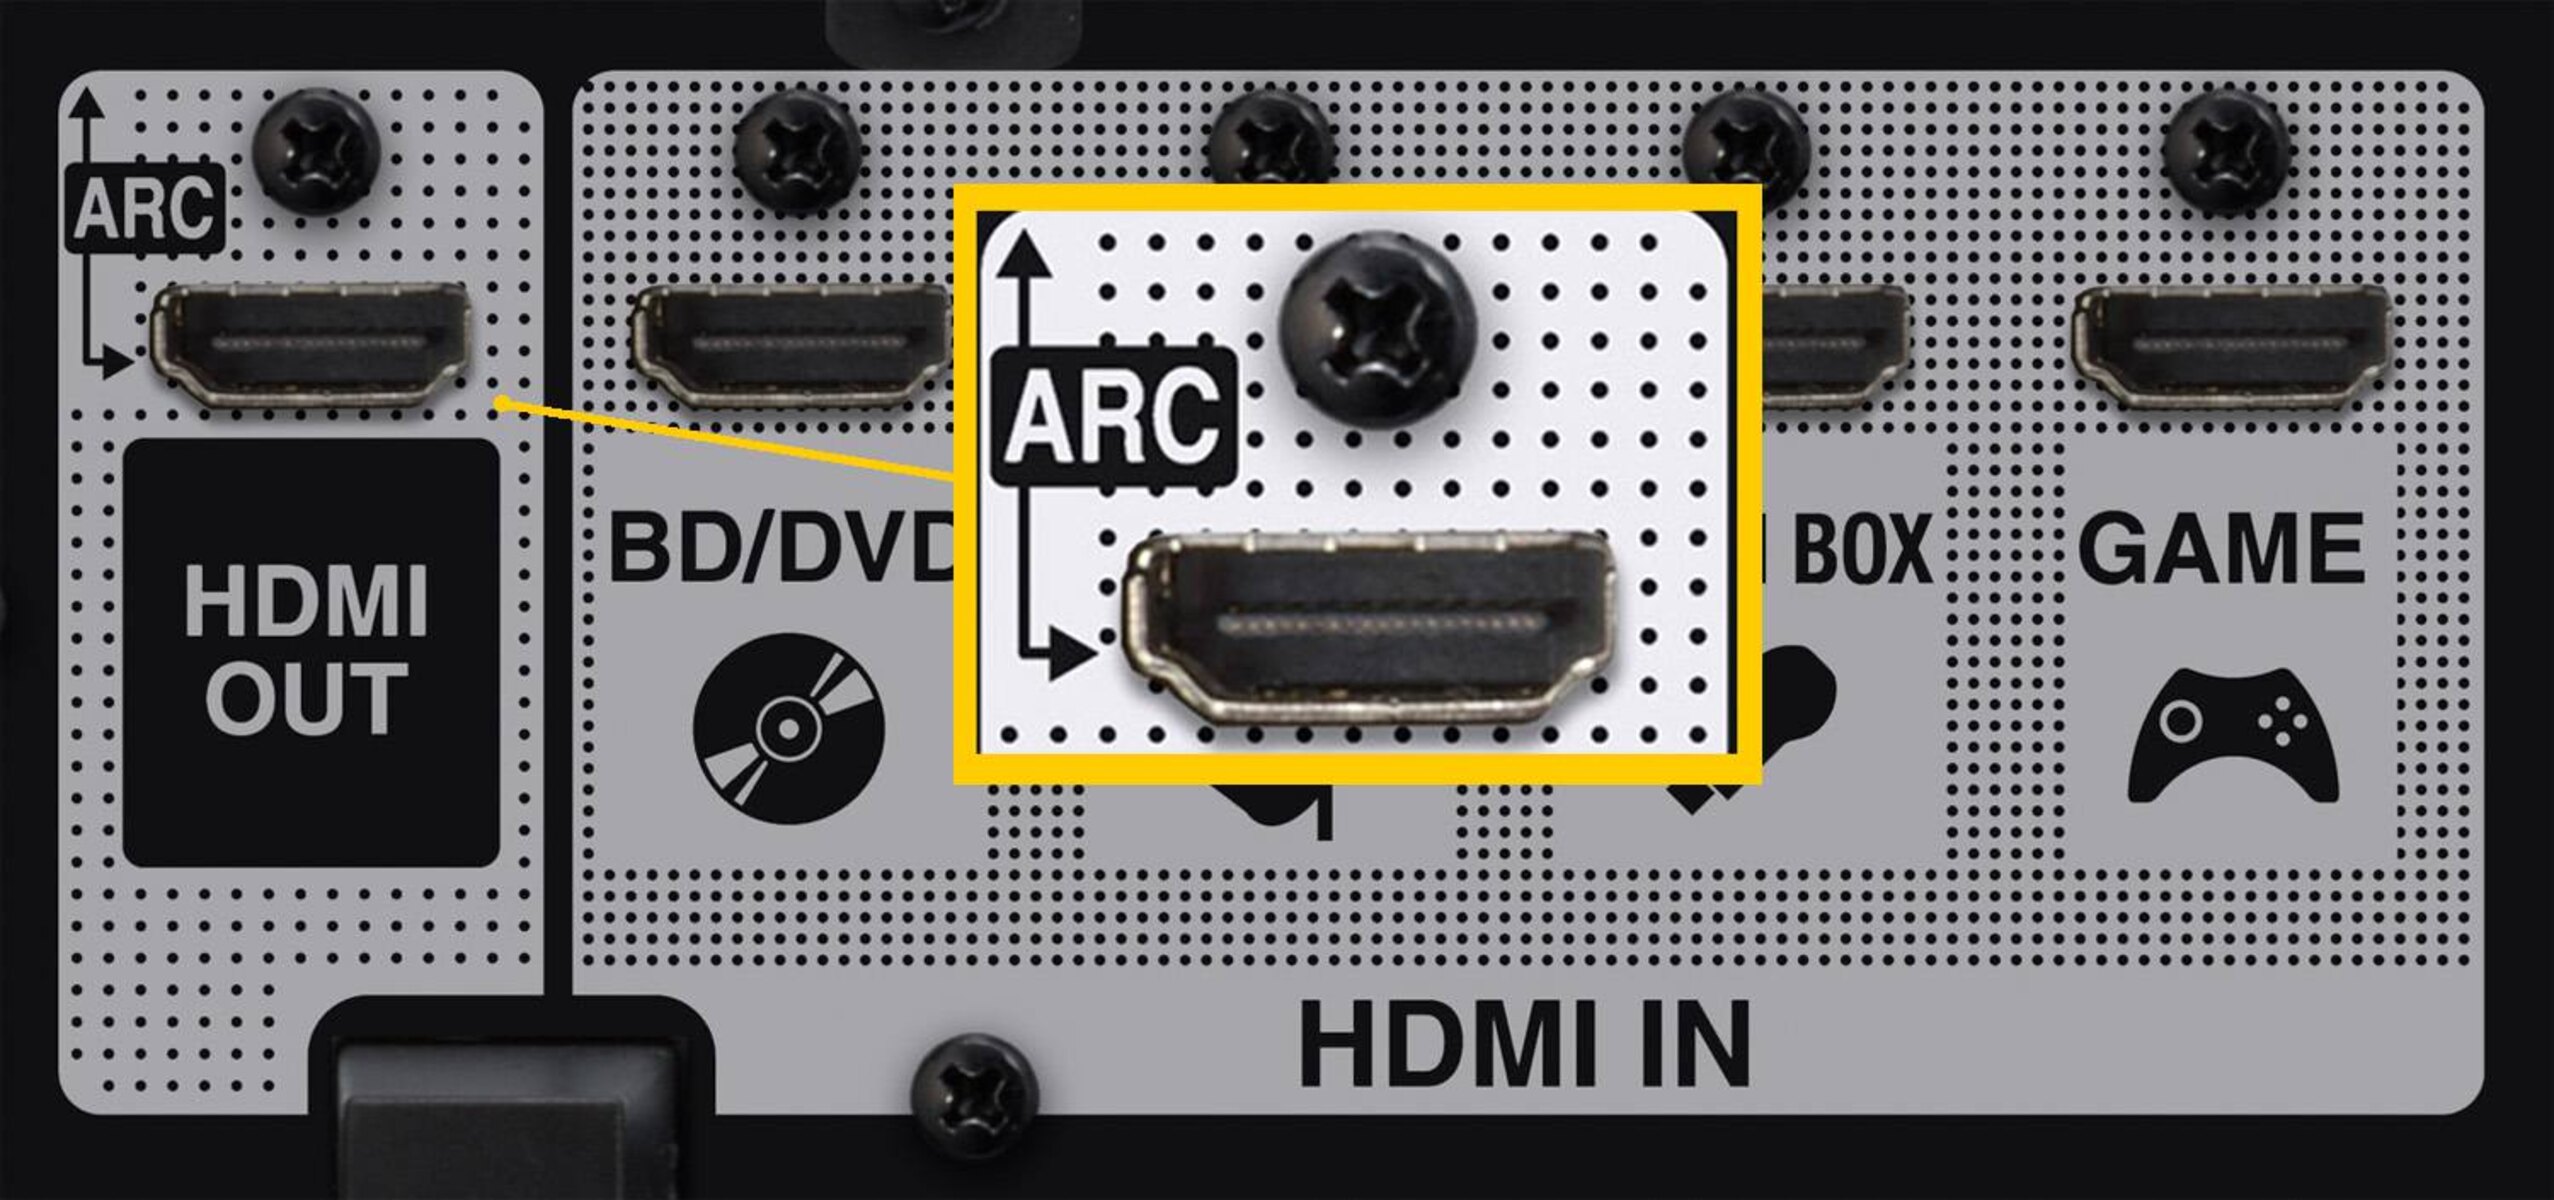 What Does Arc HDMI Mean